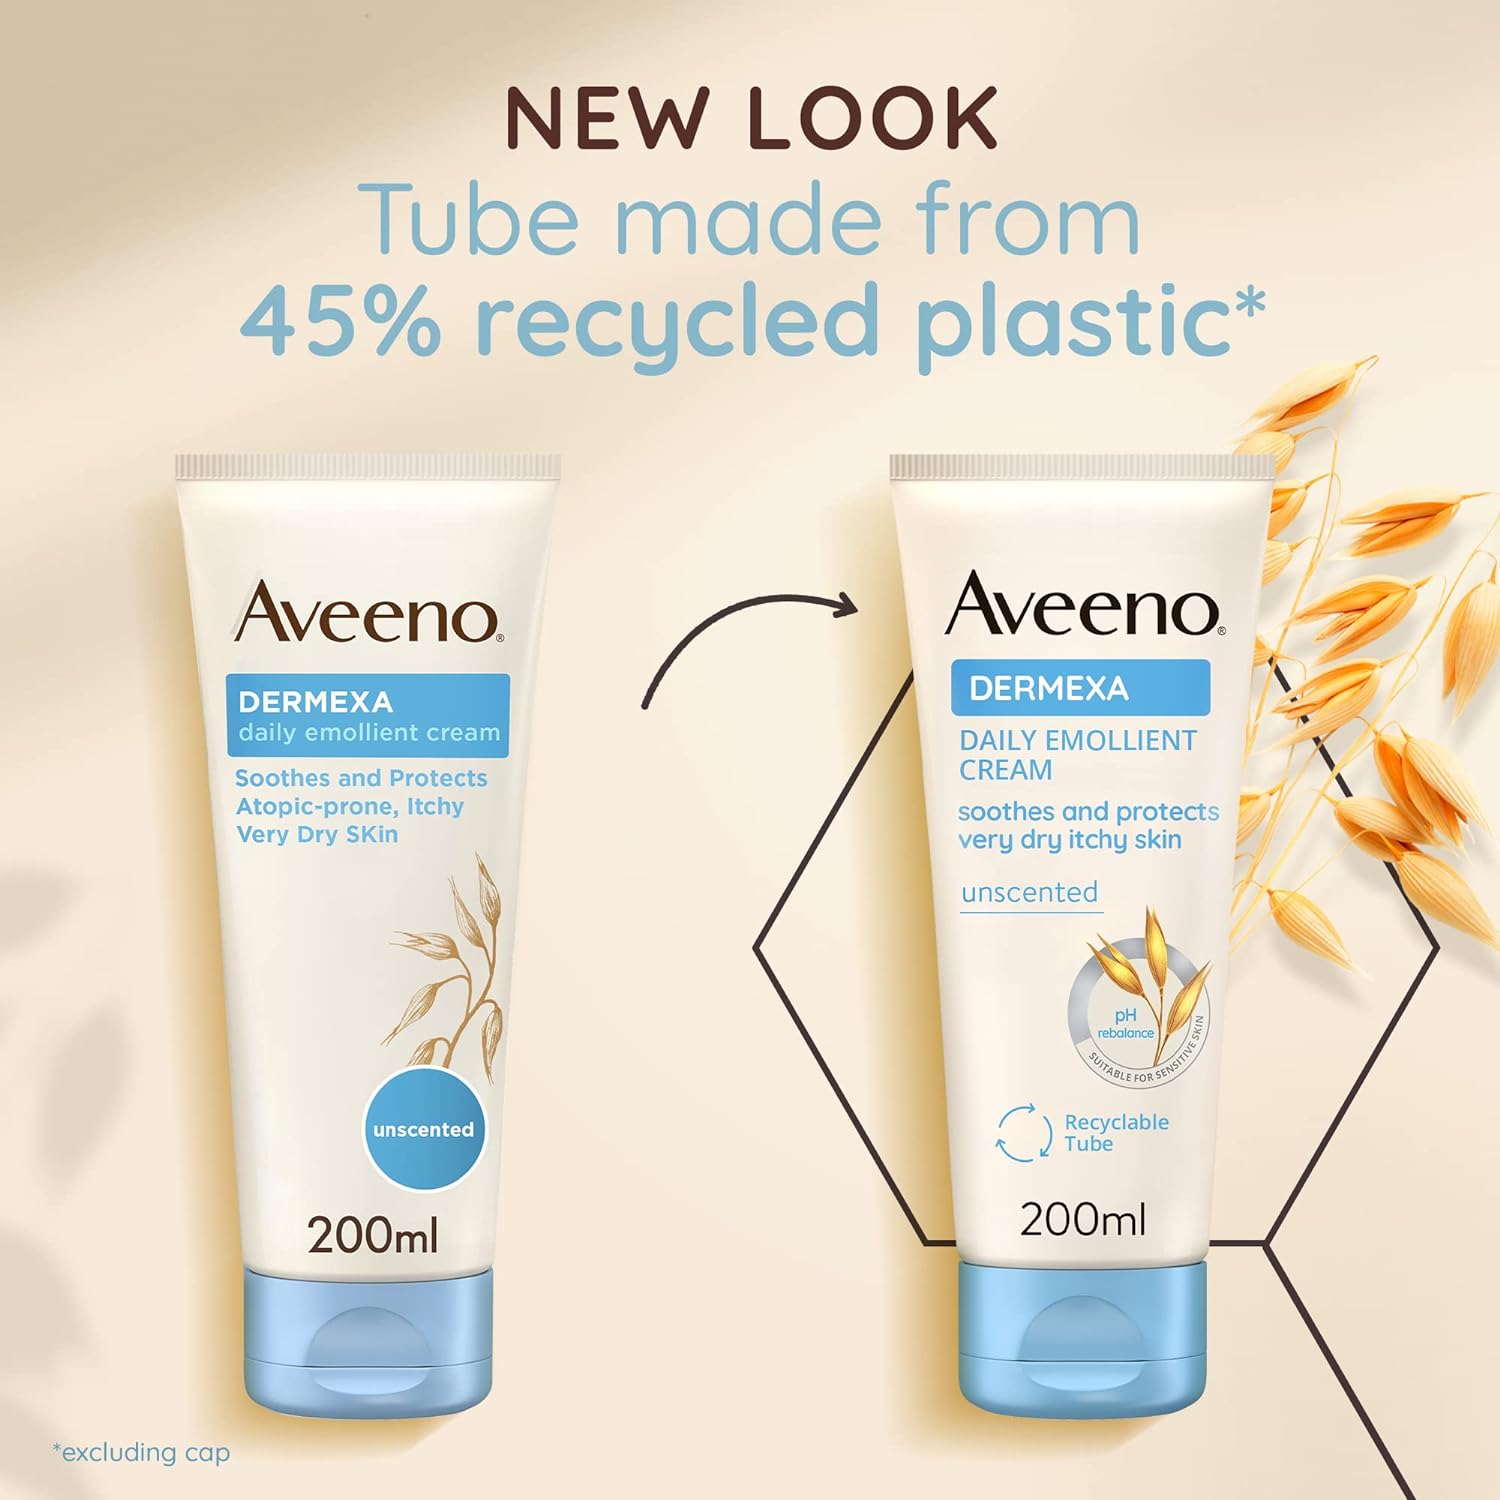 Aveeno Dermexa Daily Emollient Cream, 200 ml (Packaging May Vary) : Amazon.co.uk: Beauty